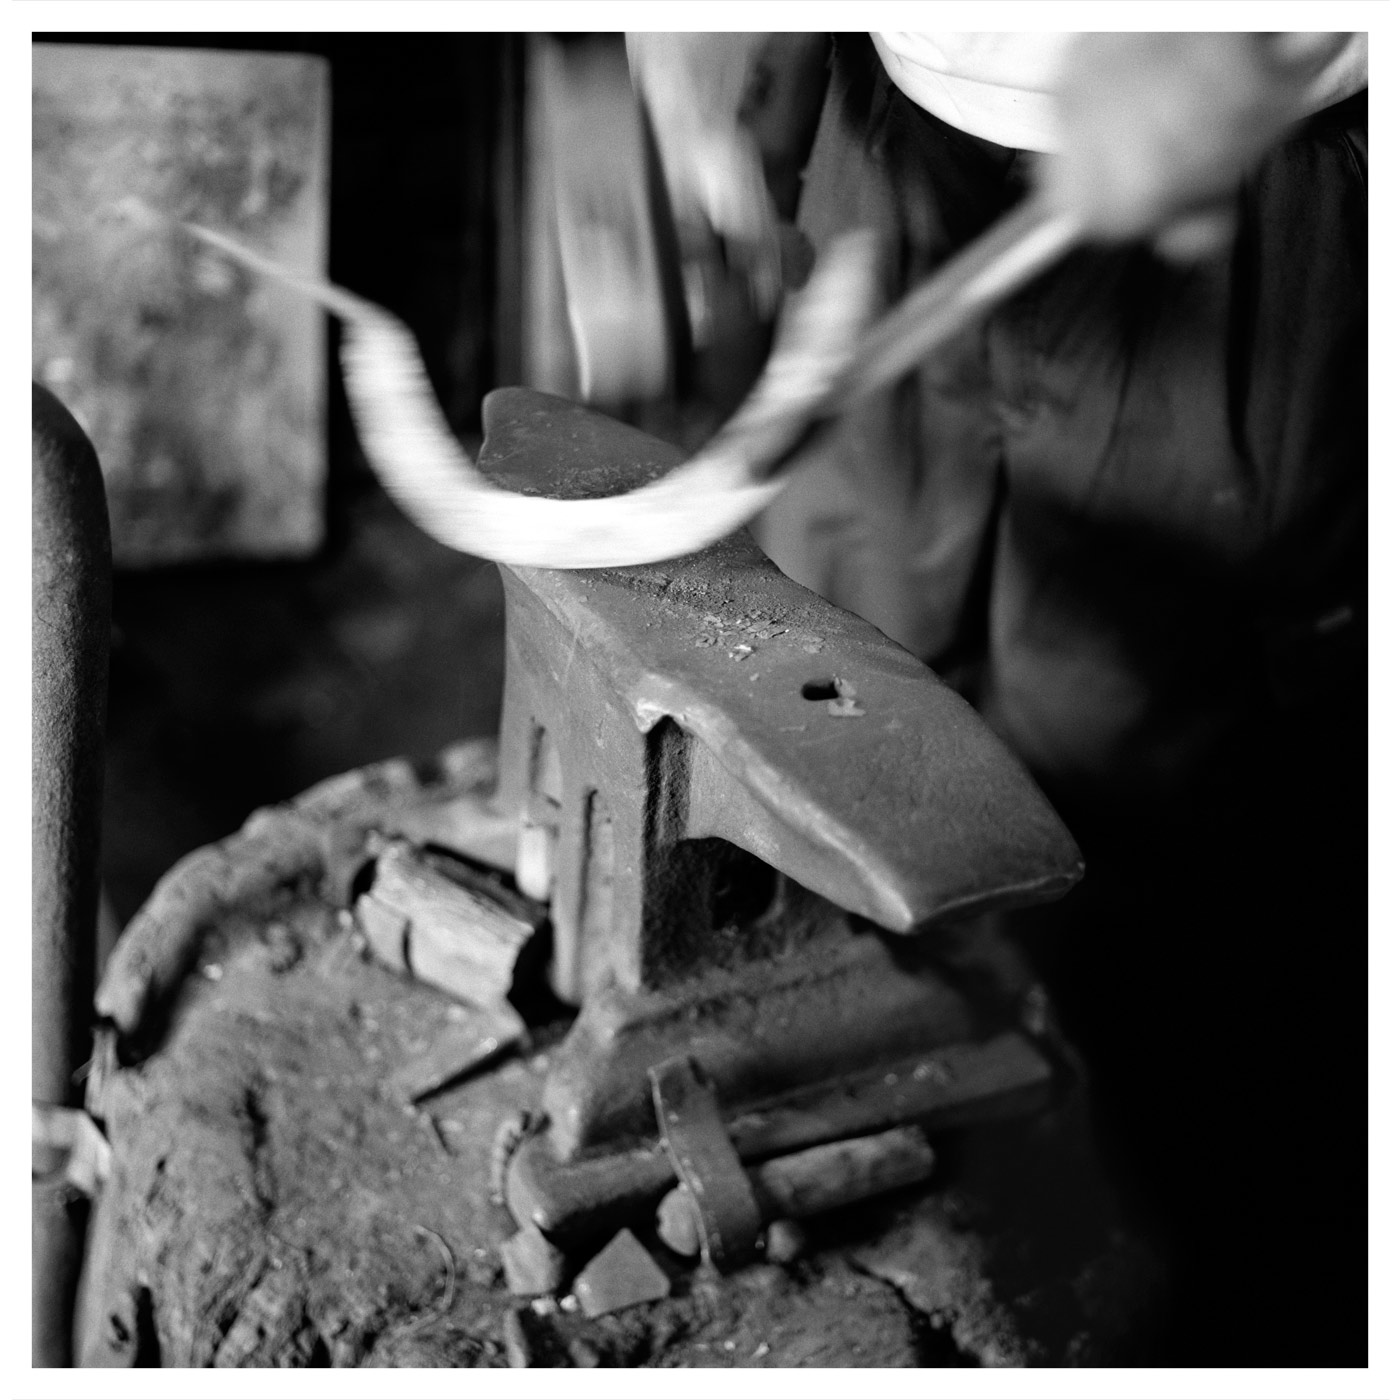 Blacksmith (hammering sickle). Ochojno, Poland, July 2009, Allan Sekula